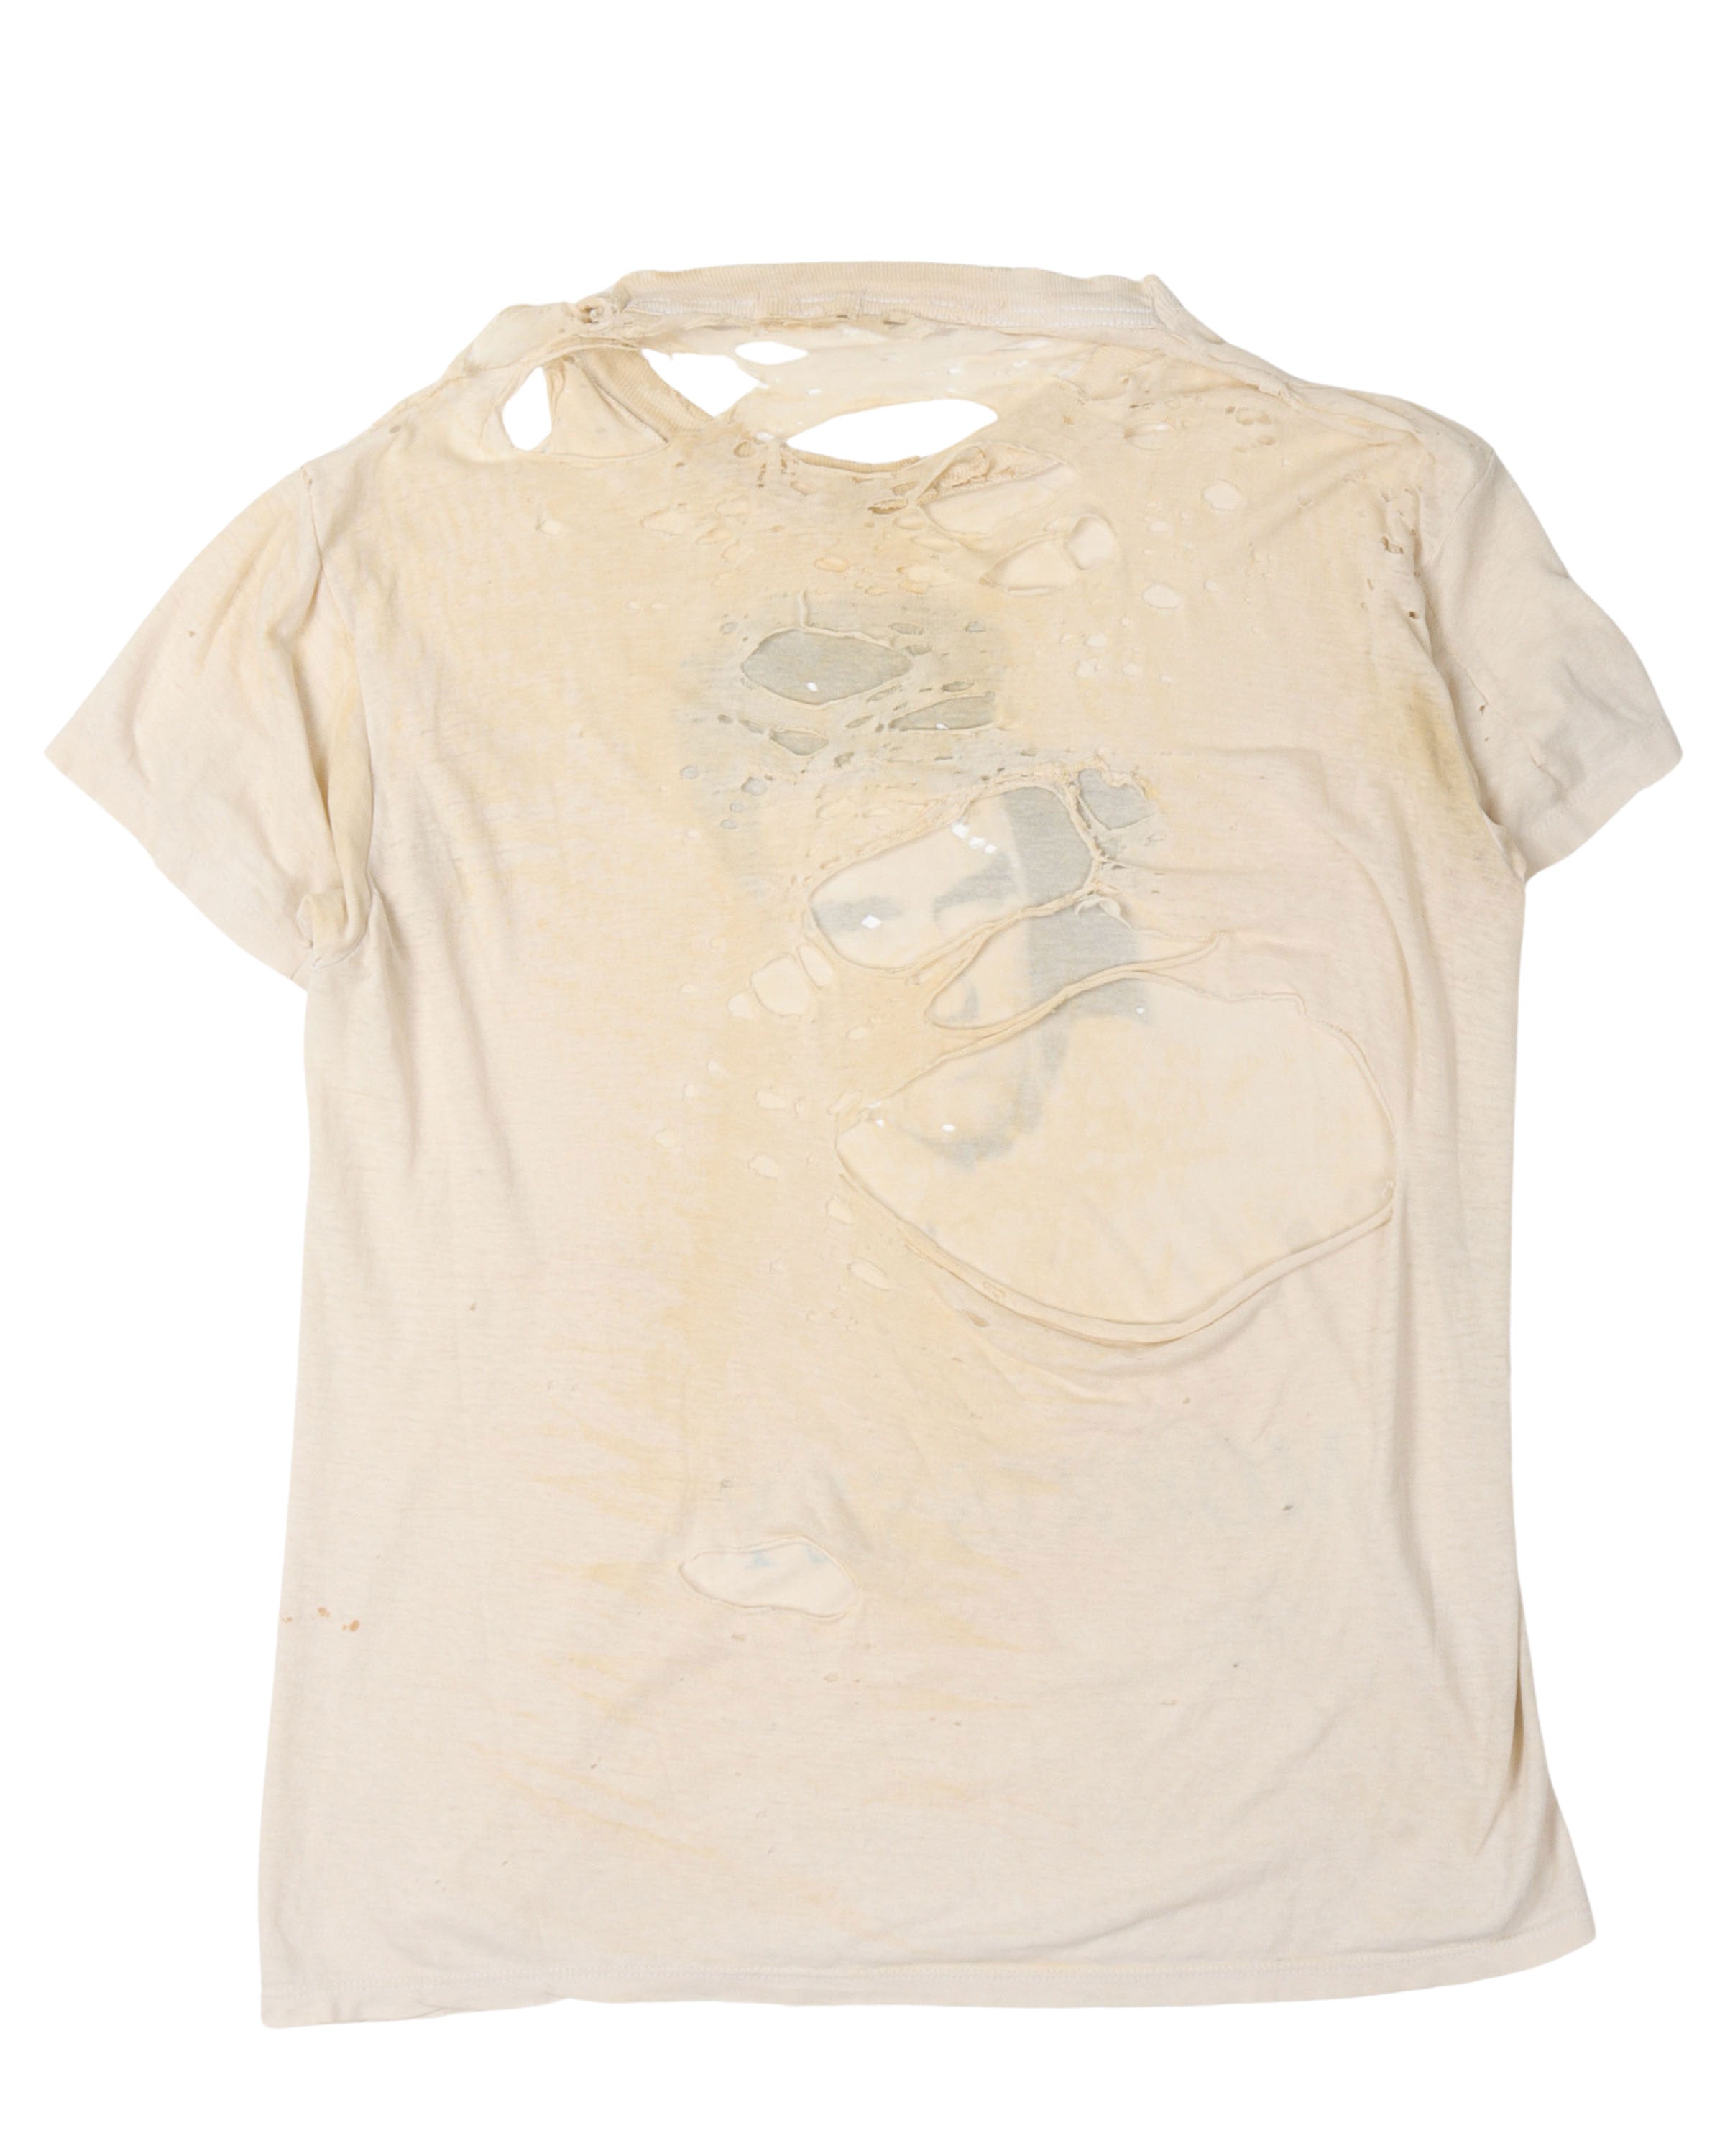 Morrissey Thrashed T-Shirt